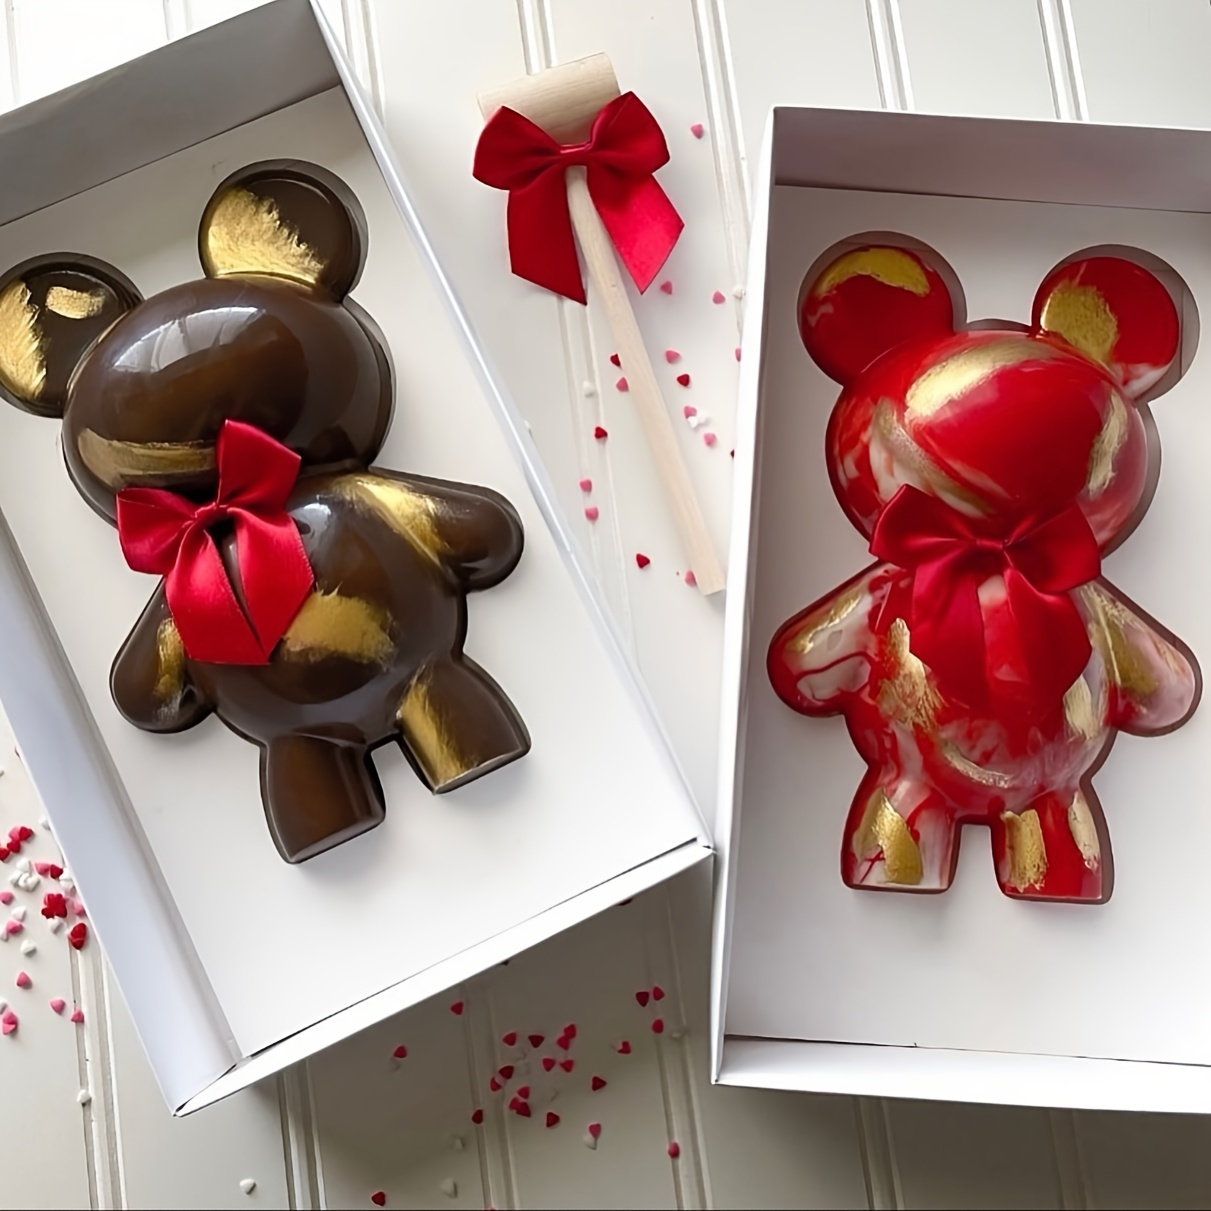 Professional Polycarbonate Geometric Teddy Bear Chocolate Mold